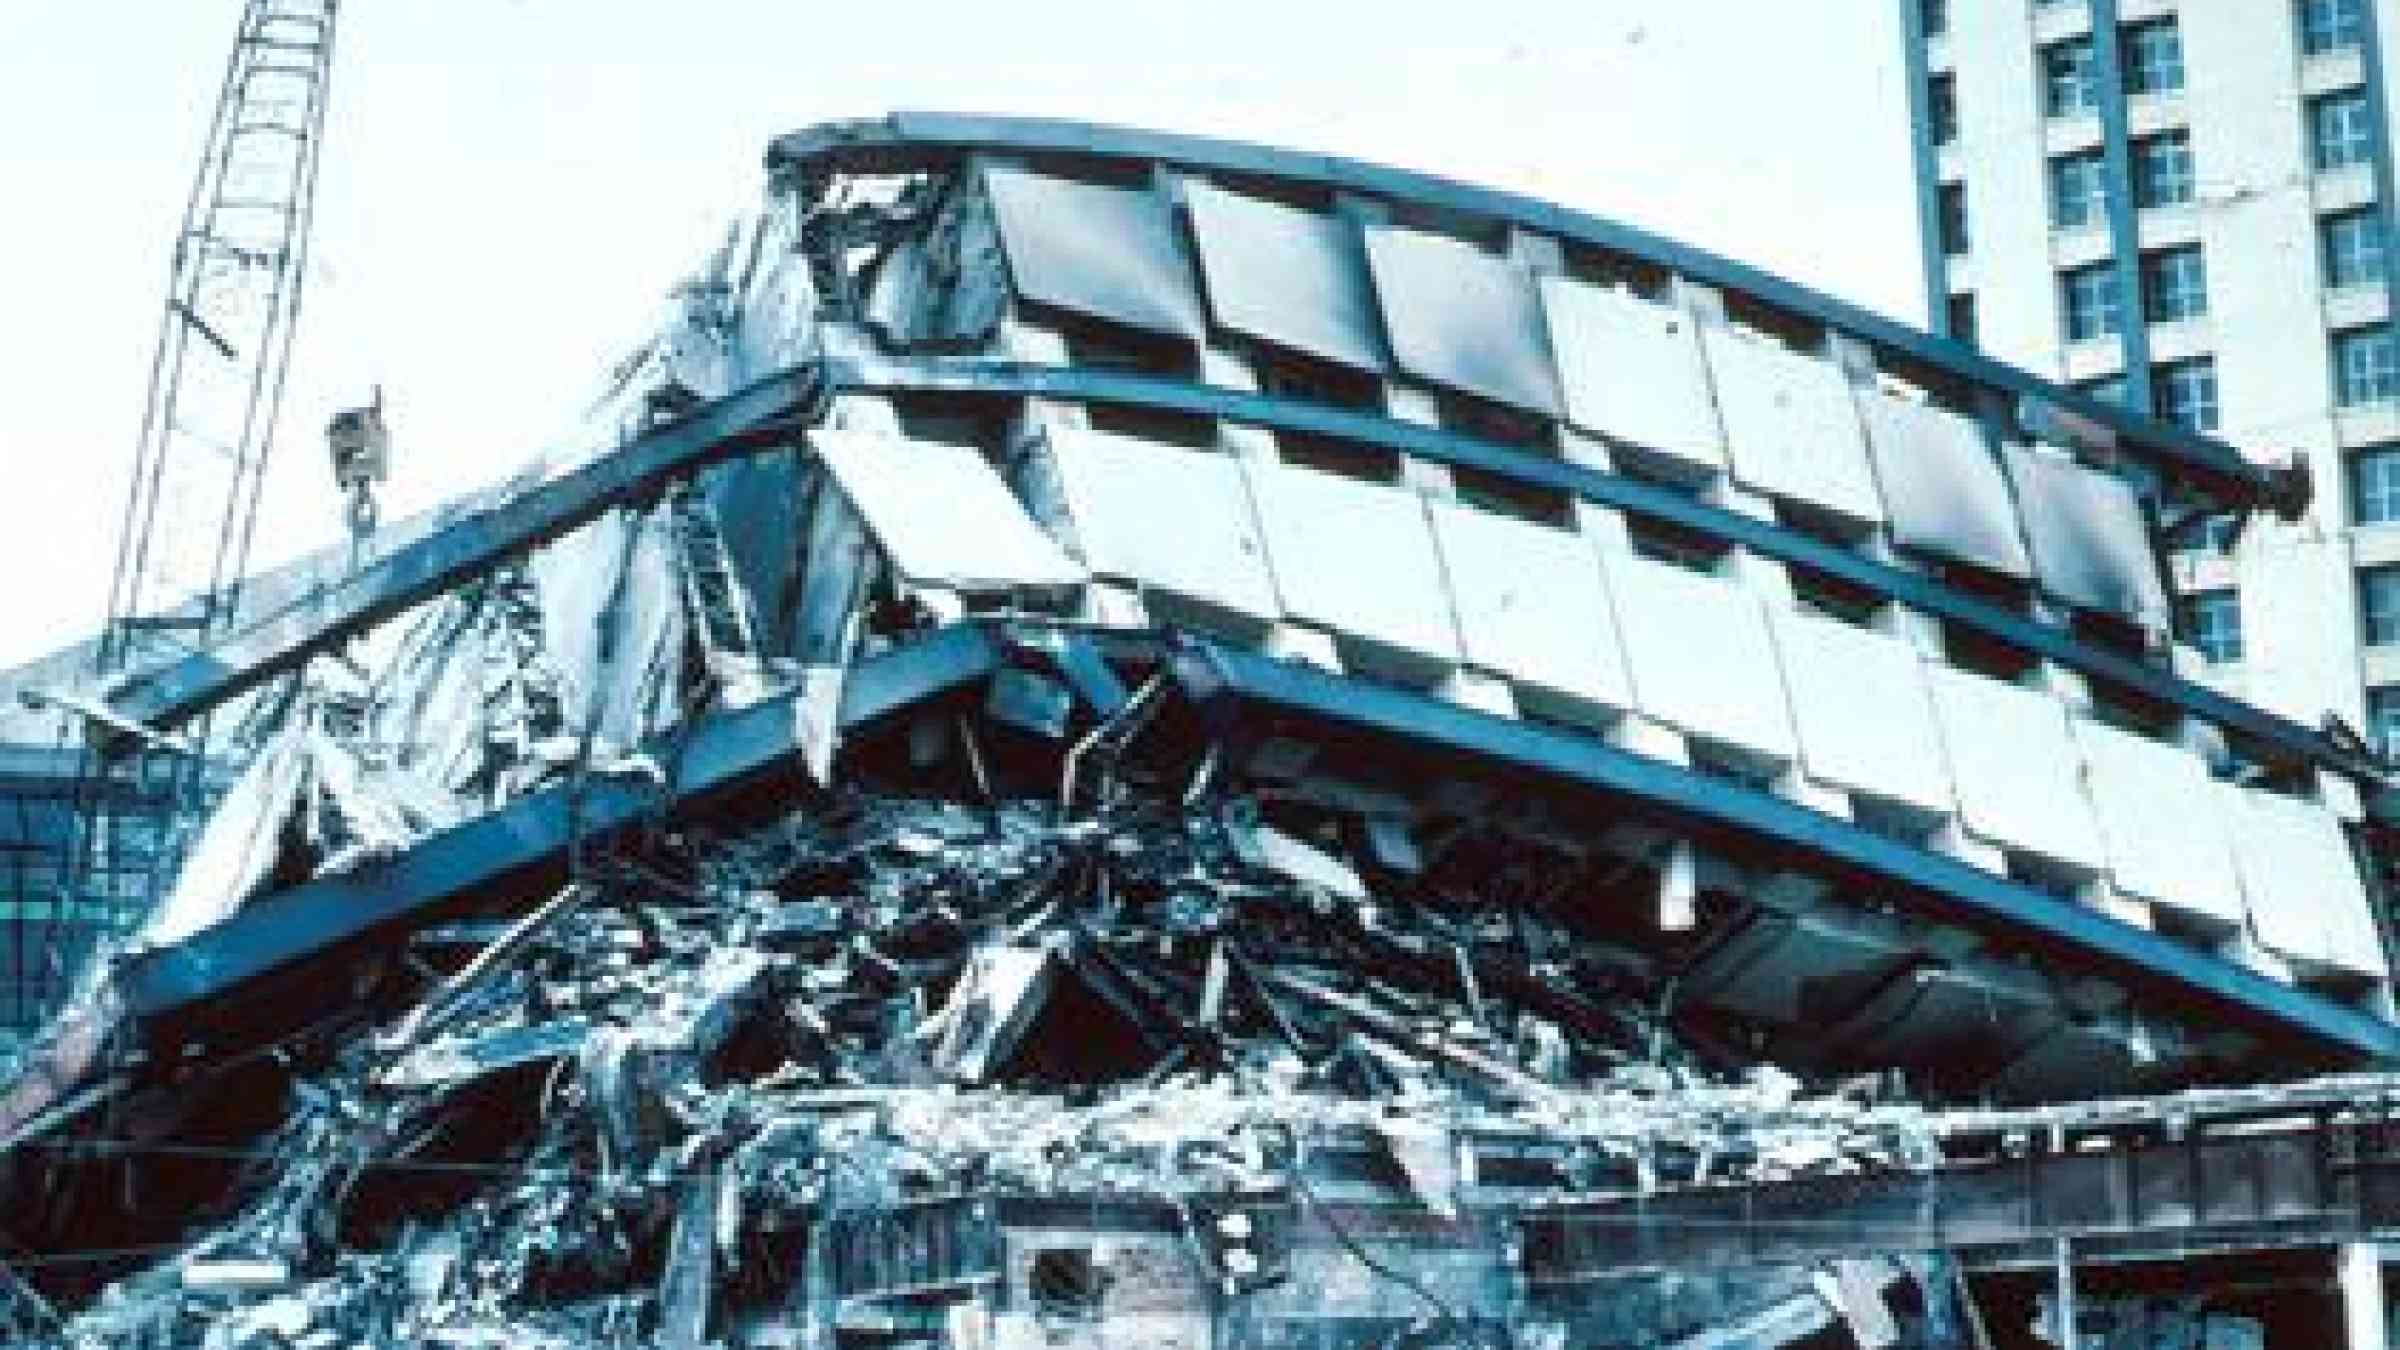 Wreckage of the Pina Suarez Apartment Complex following the 1985 Mexico Earthquake.